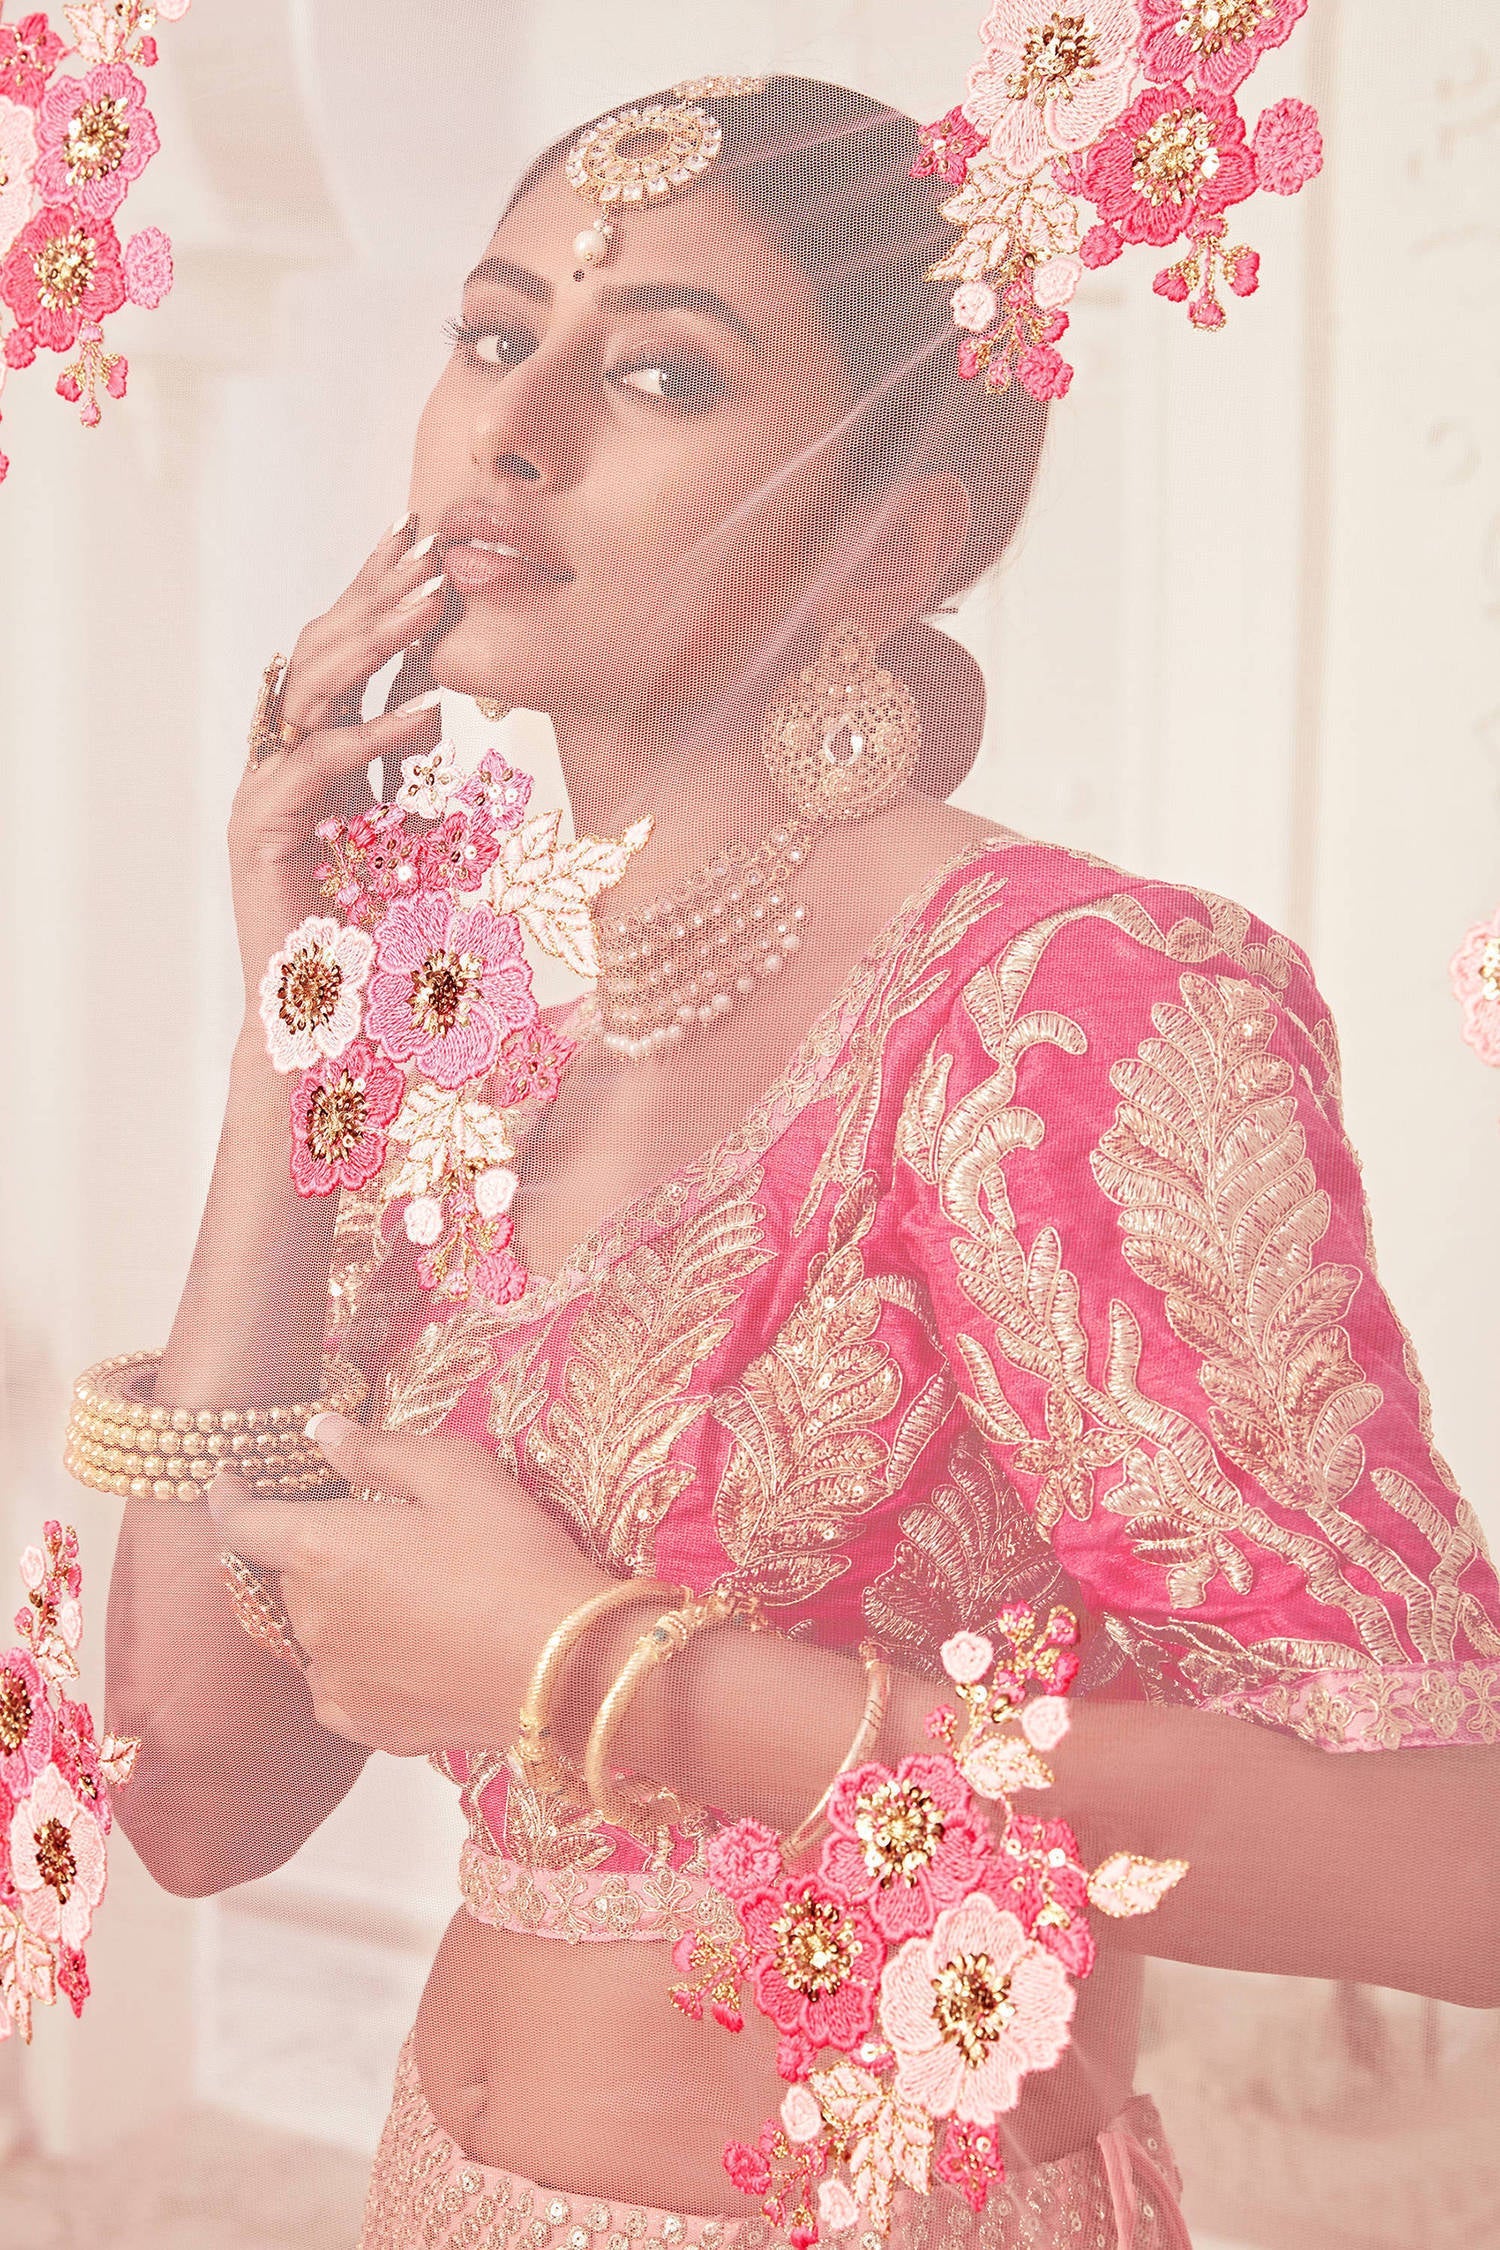 Mesmerizing Pink Embroidery Net Wedding Lehenga Choli With Dupatta